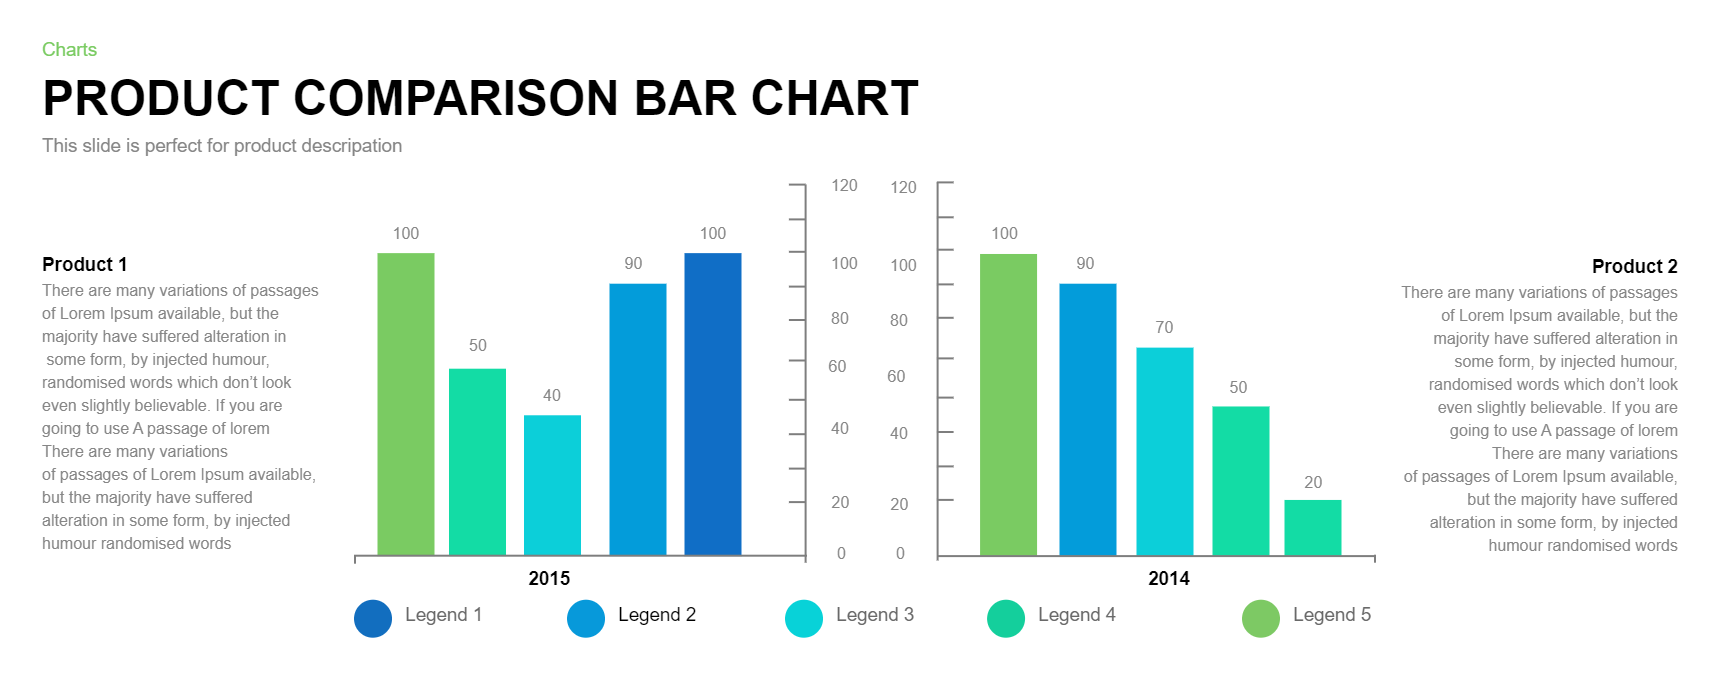 Product Comparison Bar Chart